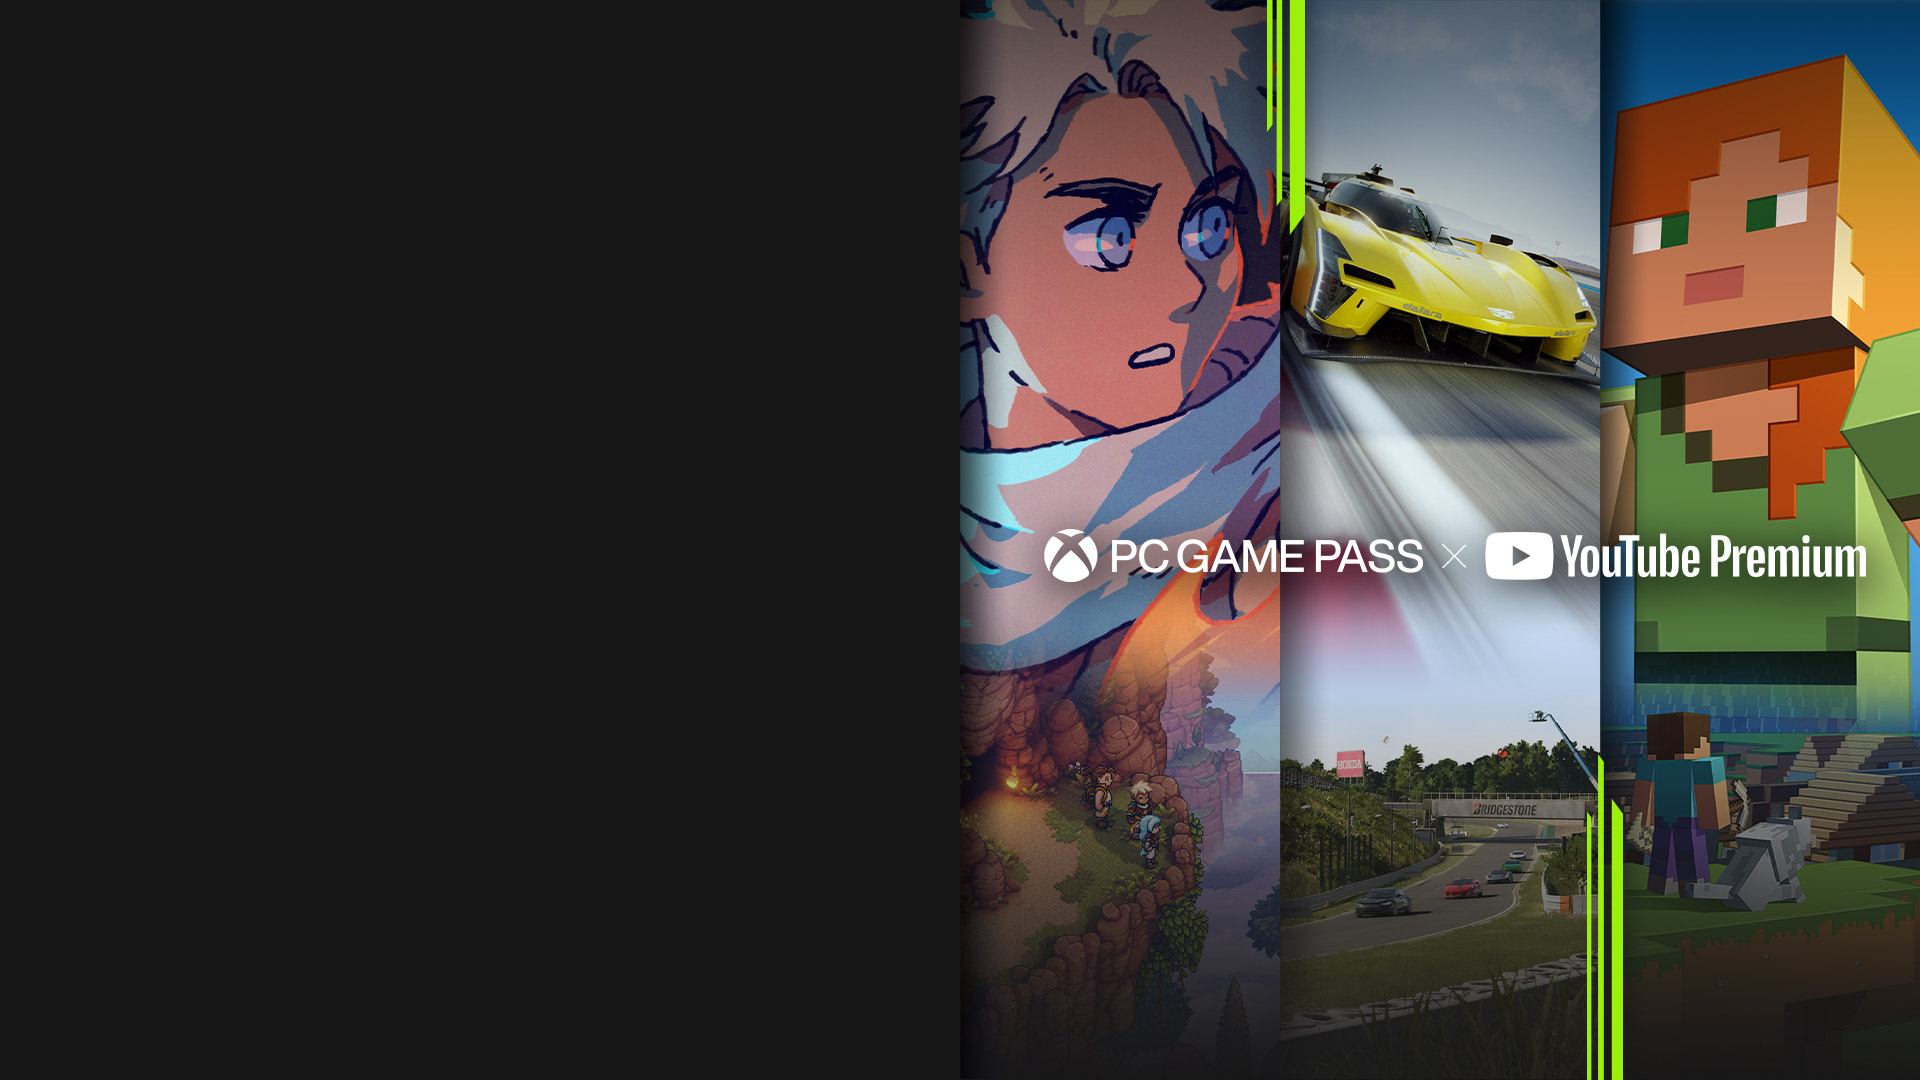 Halo Infinite, Sea of Stars, PAYDAY 3, Forza Motorsport 및 Minecraft 등 PC Game Pass로 이용할 수 있는 여러 게임 위에 PC Game Pass 로고 및 YouTube Premium 로고가 표시됩니다.